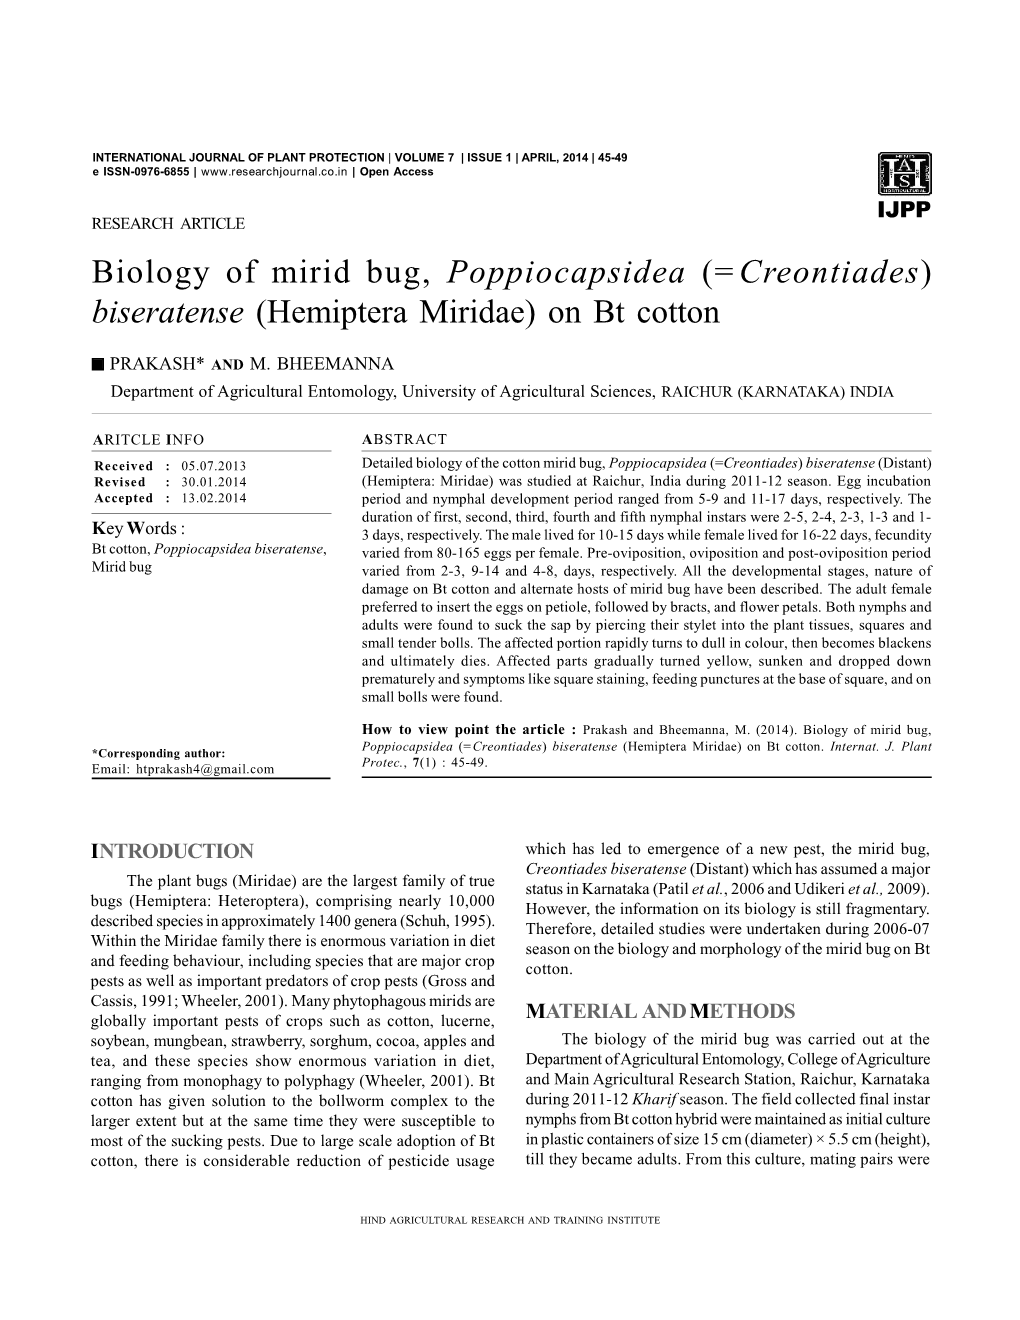 Biology of Mirid Bug, Poppiocapsidea (=Creontiades) Biseratense (Hemiptera Miridae) on Bt Cotton